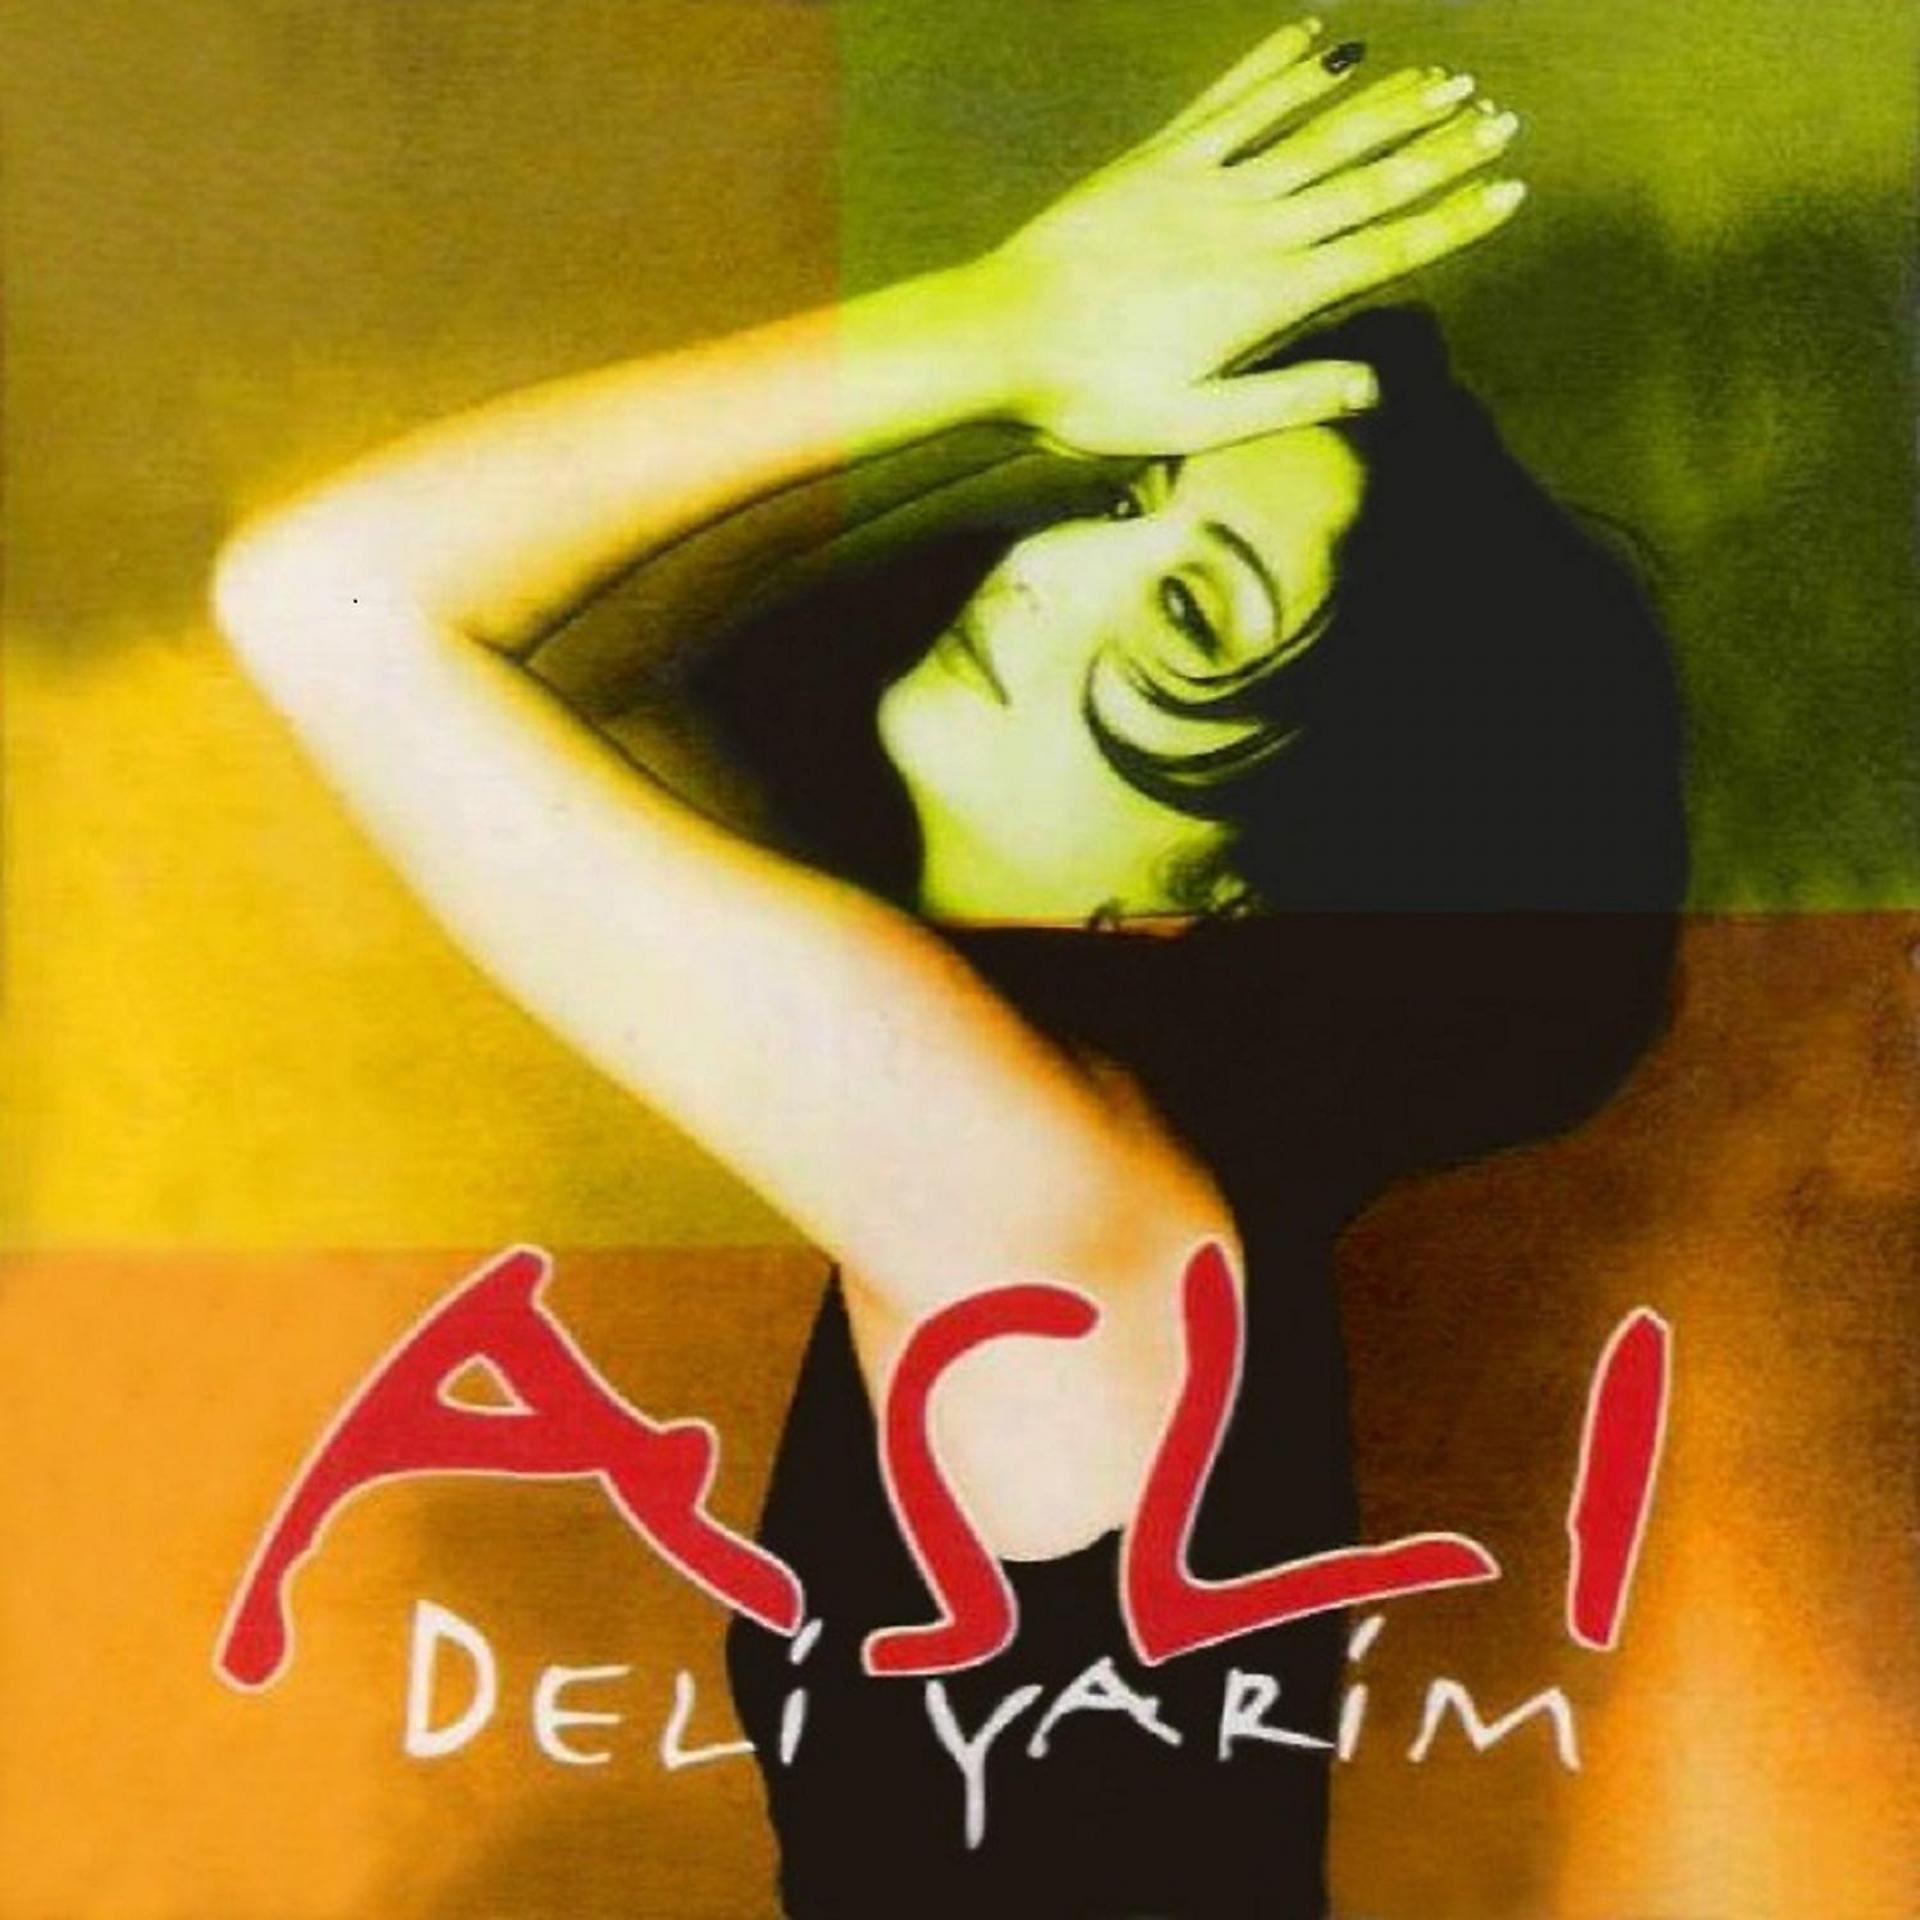 Постер альбома Deli Yarim